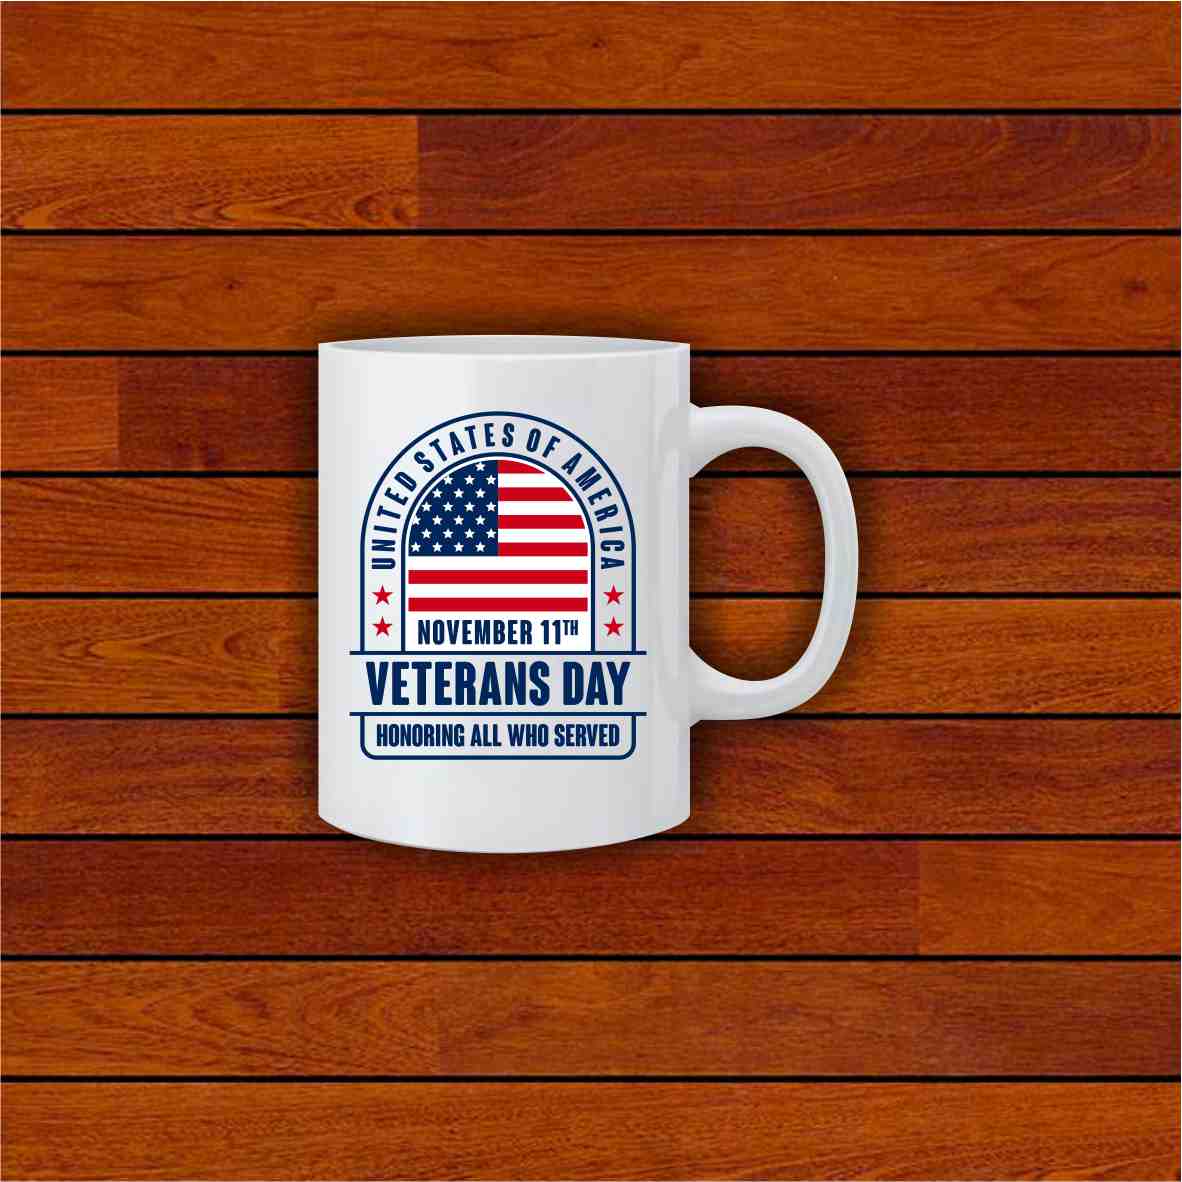 veteran day united states of america badge 3 584